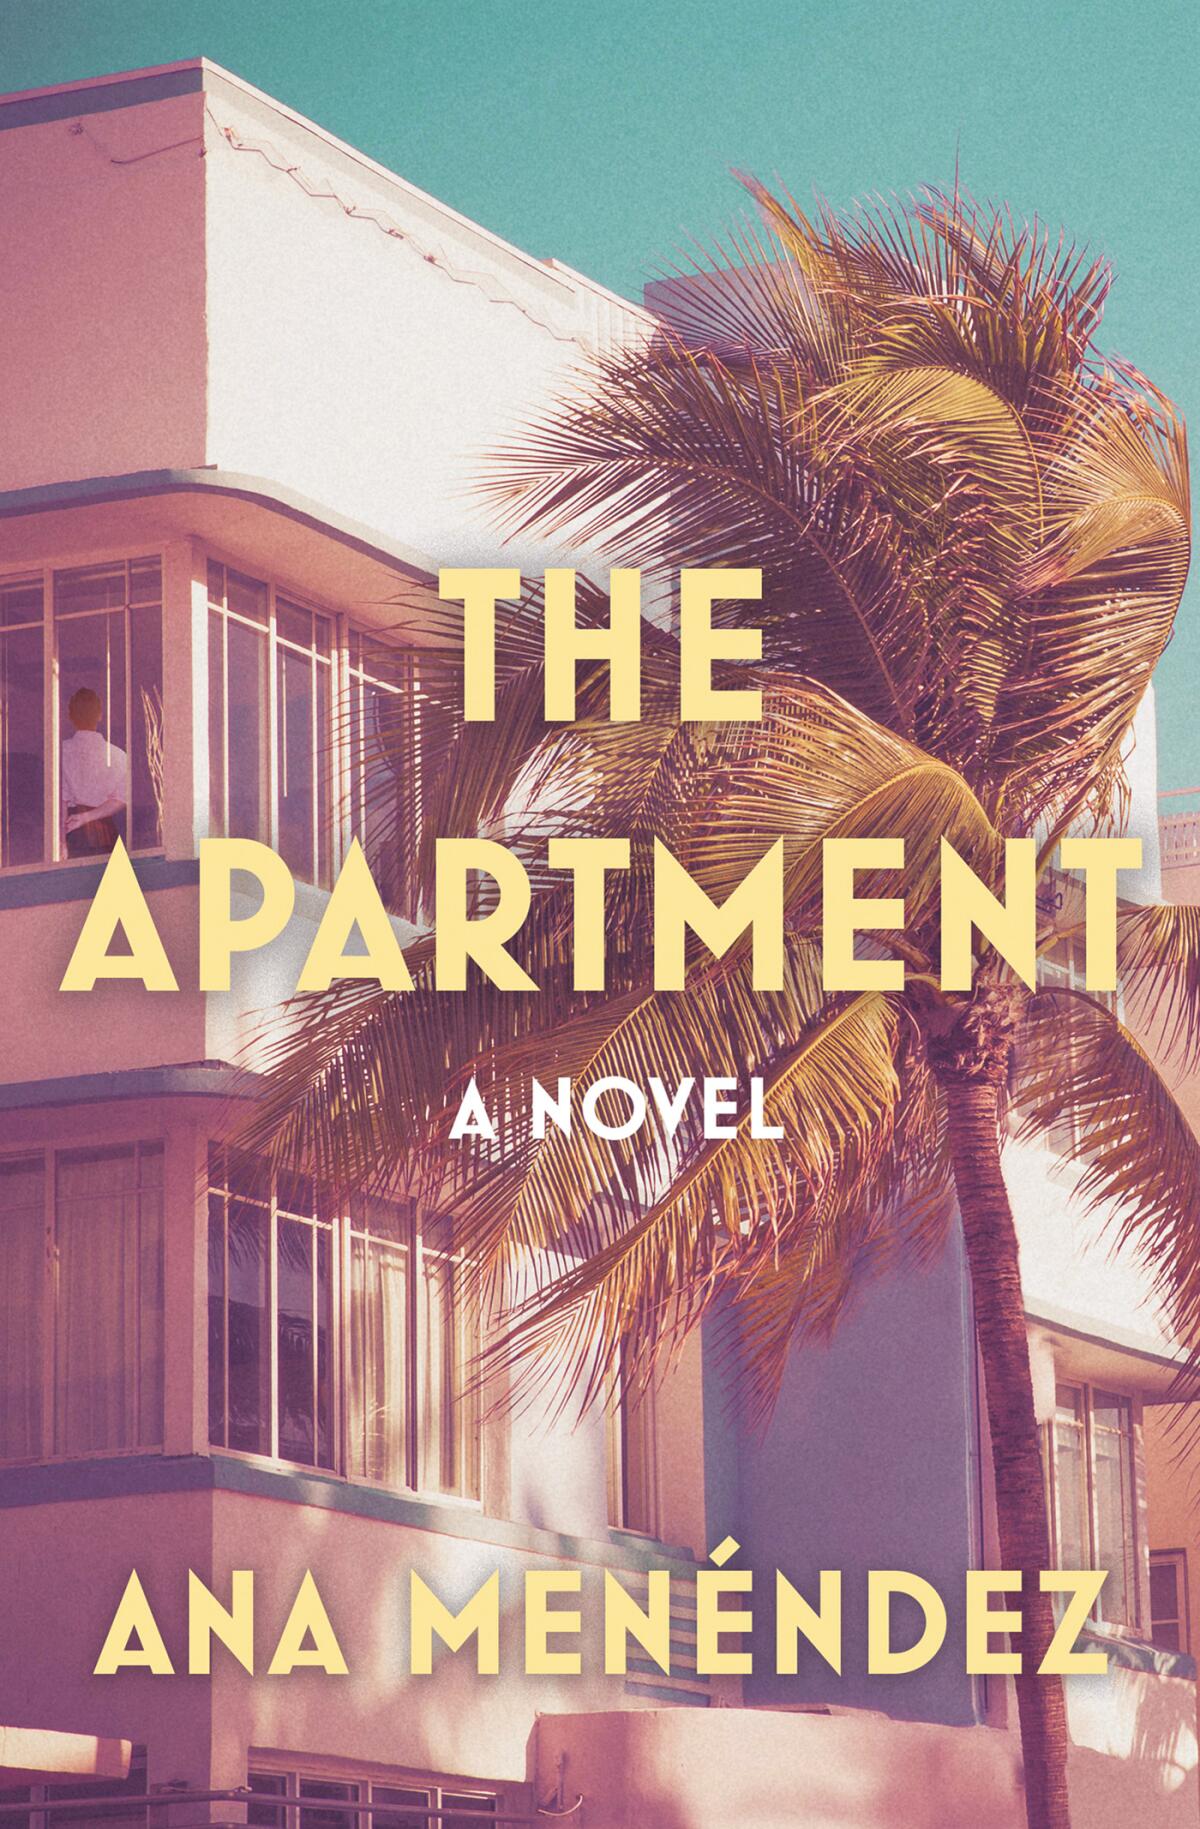 'The Apartment' by Ana Menéndez